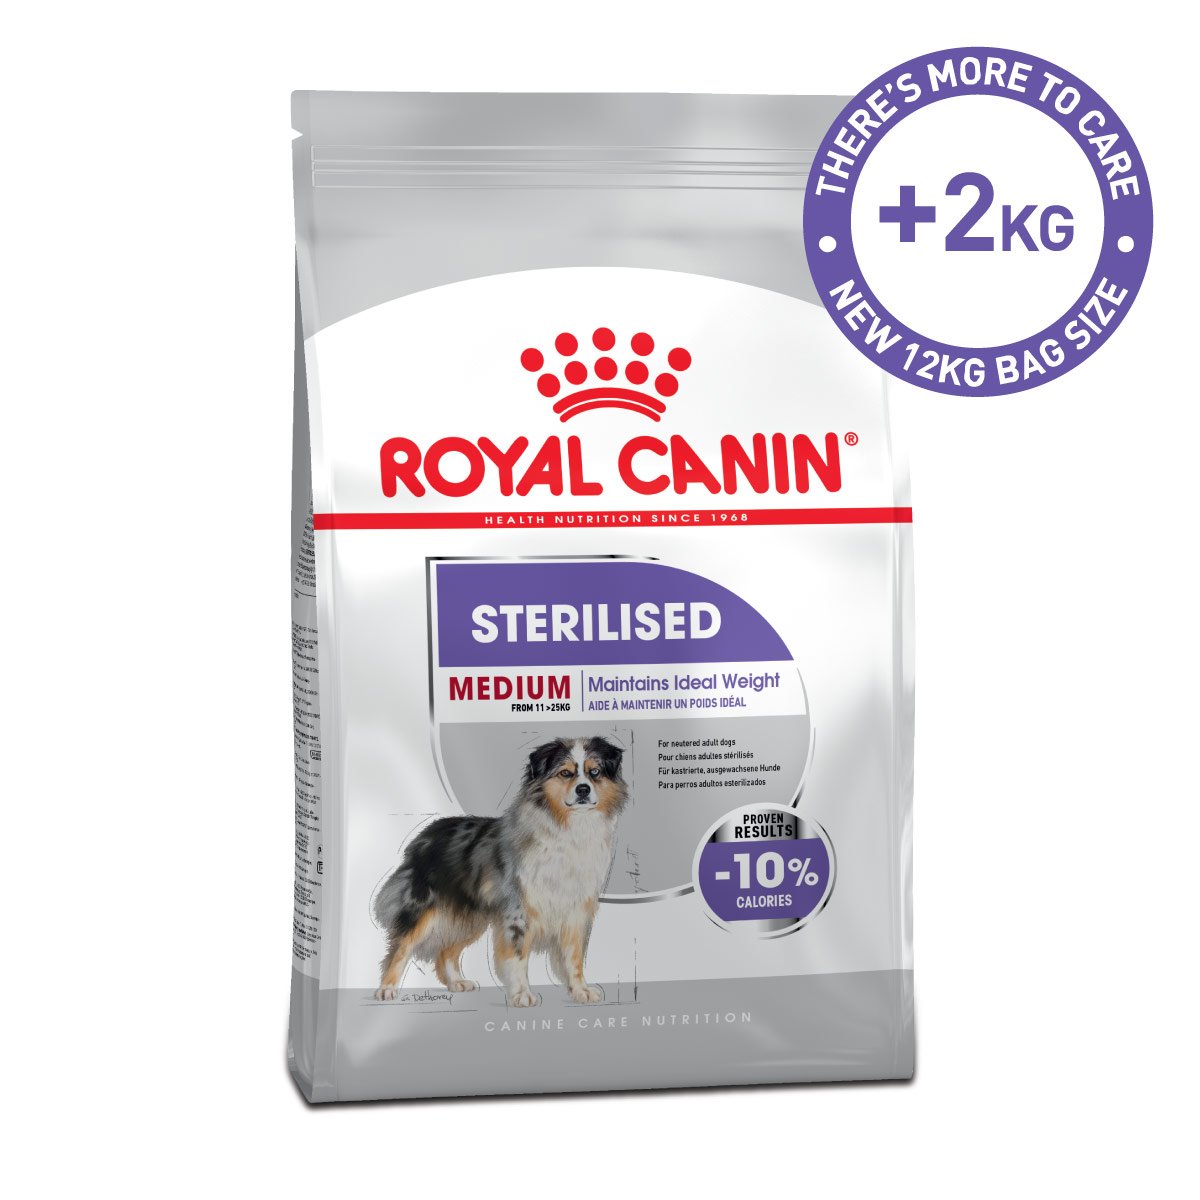 ROYAL CANIN STERILISED MEDIUM Trockenfutter für kastrierte mittelgroße Hunde 12kg von Royal Canin